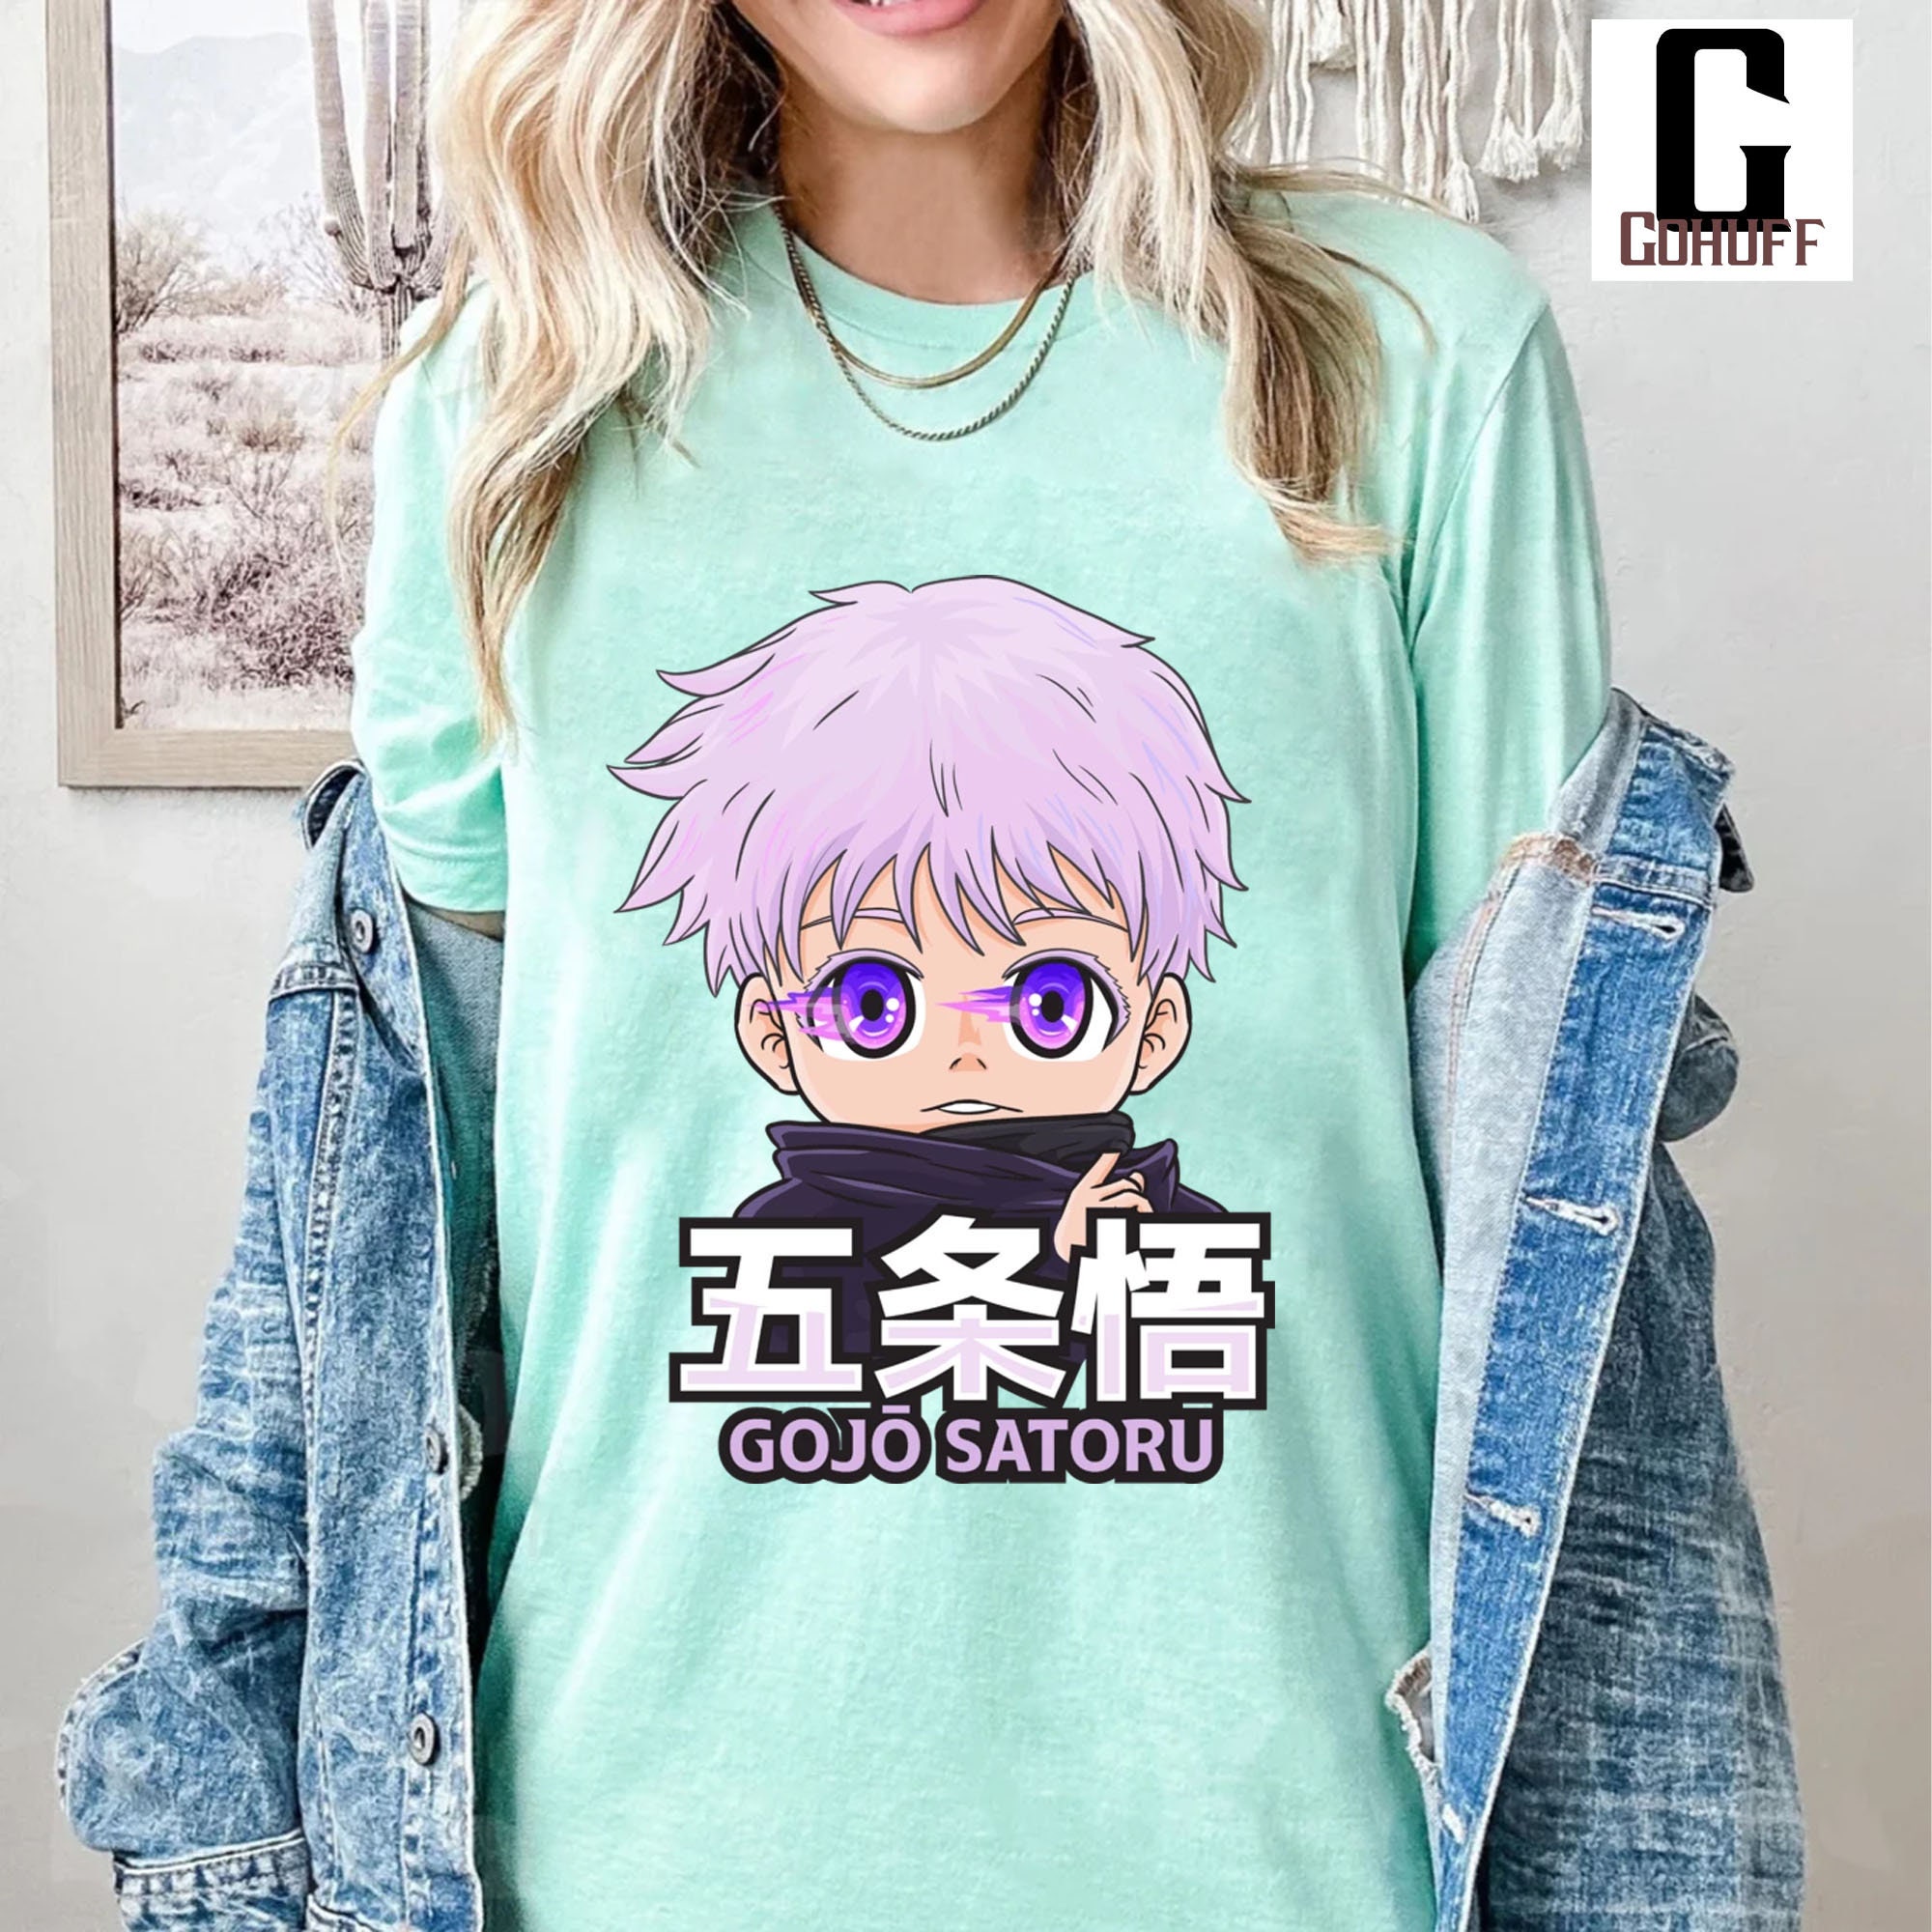 Gifts For Men Gojo Anime Jujutsu Manga Kaisen Graphic For Fan by Anime Chipi